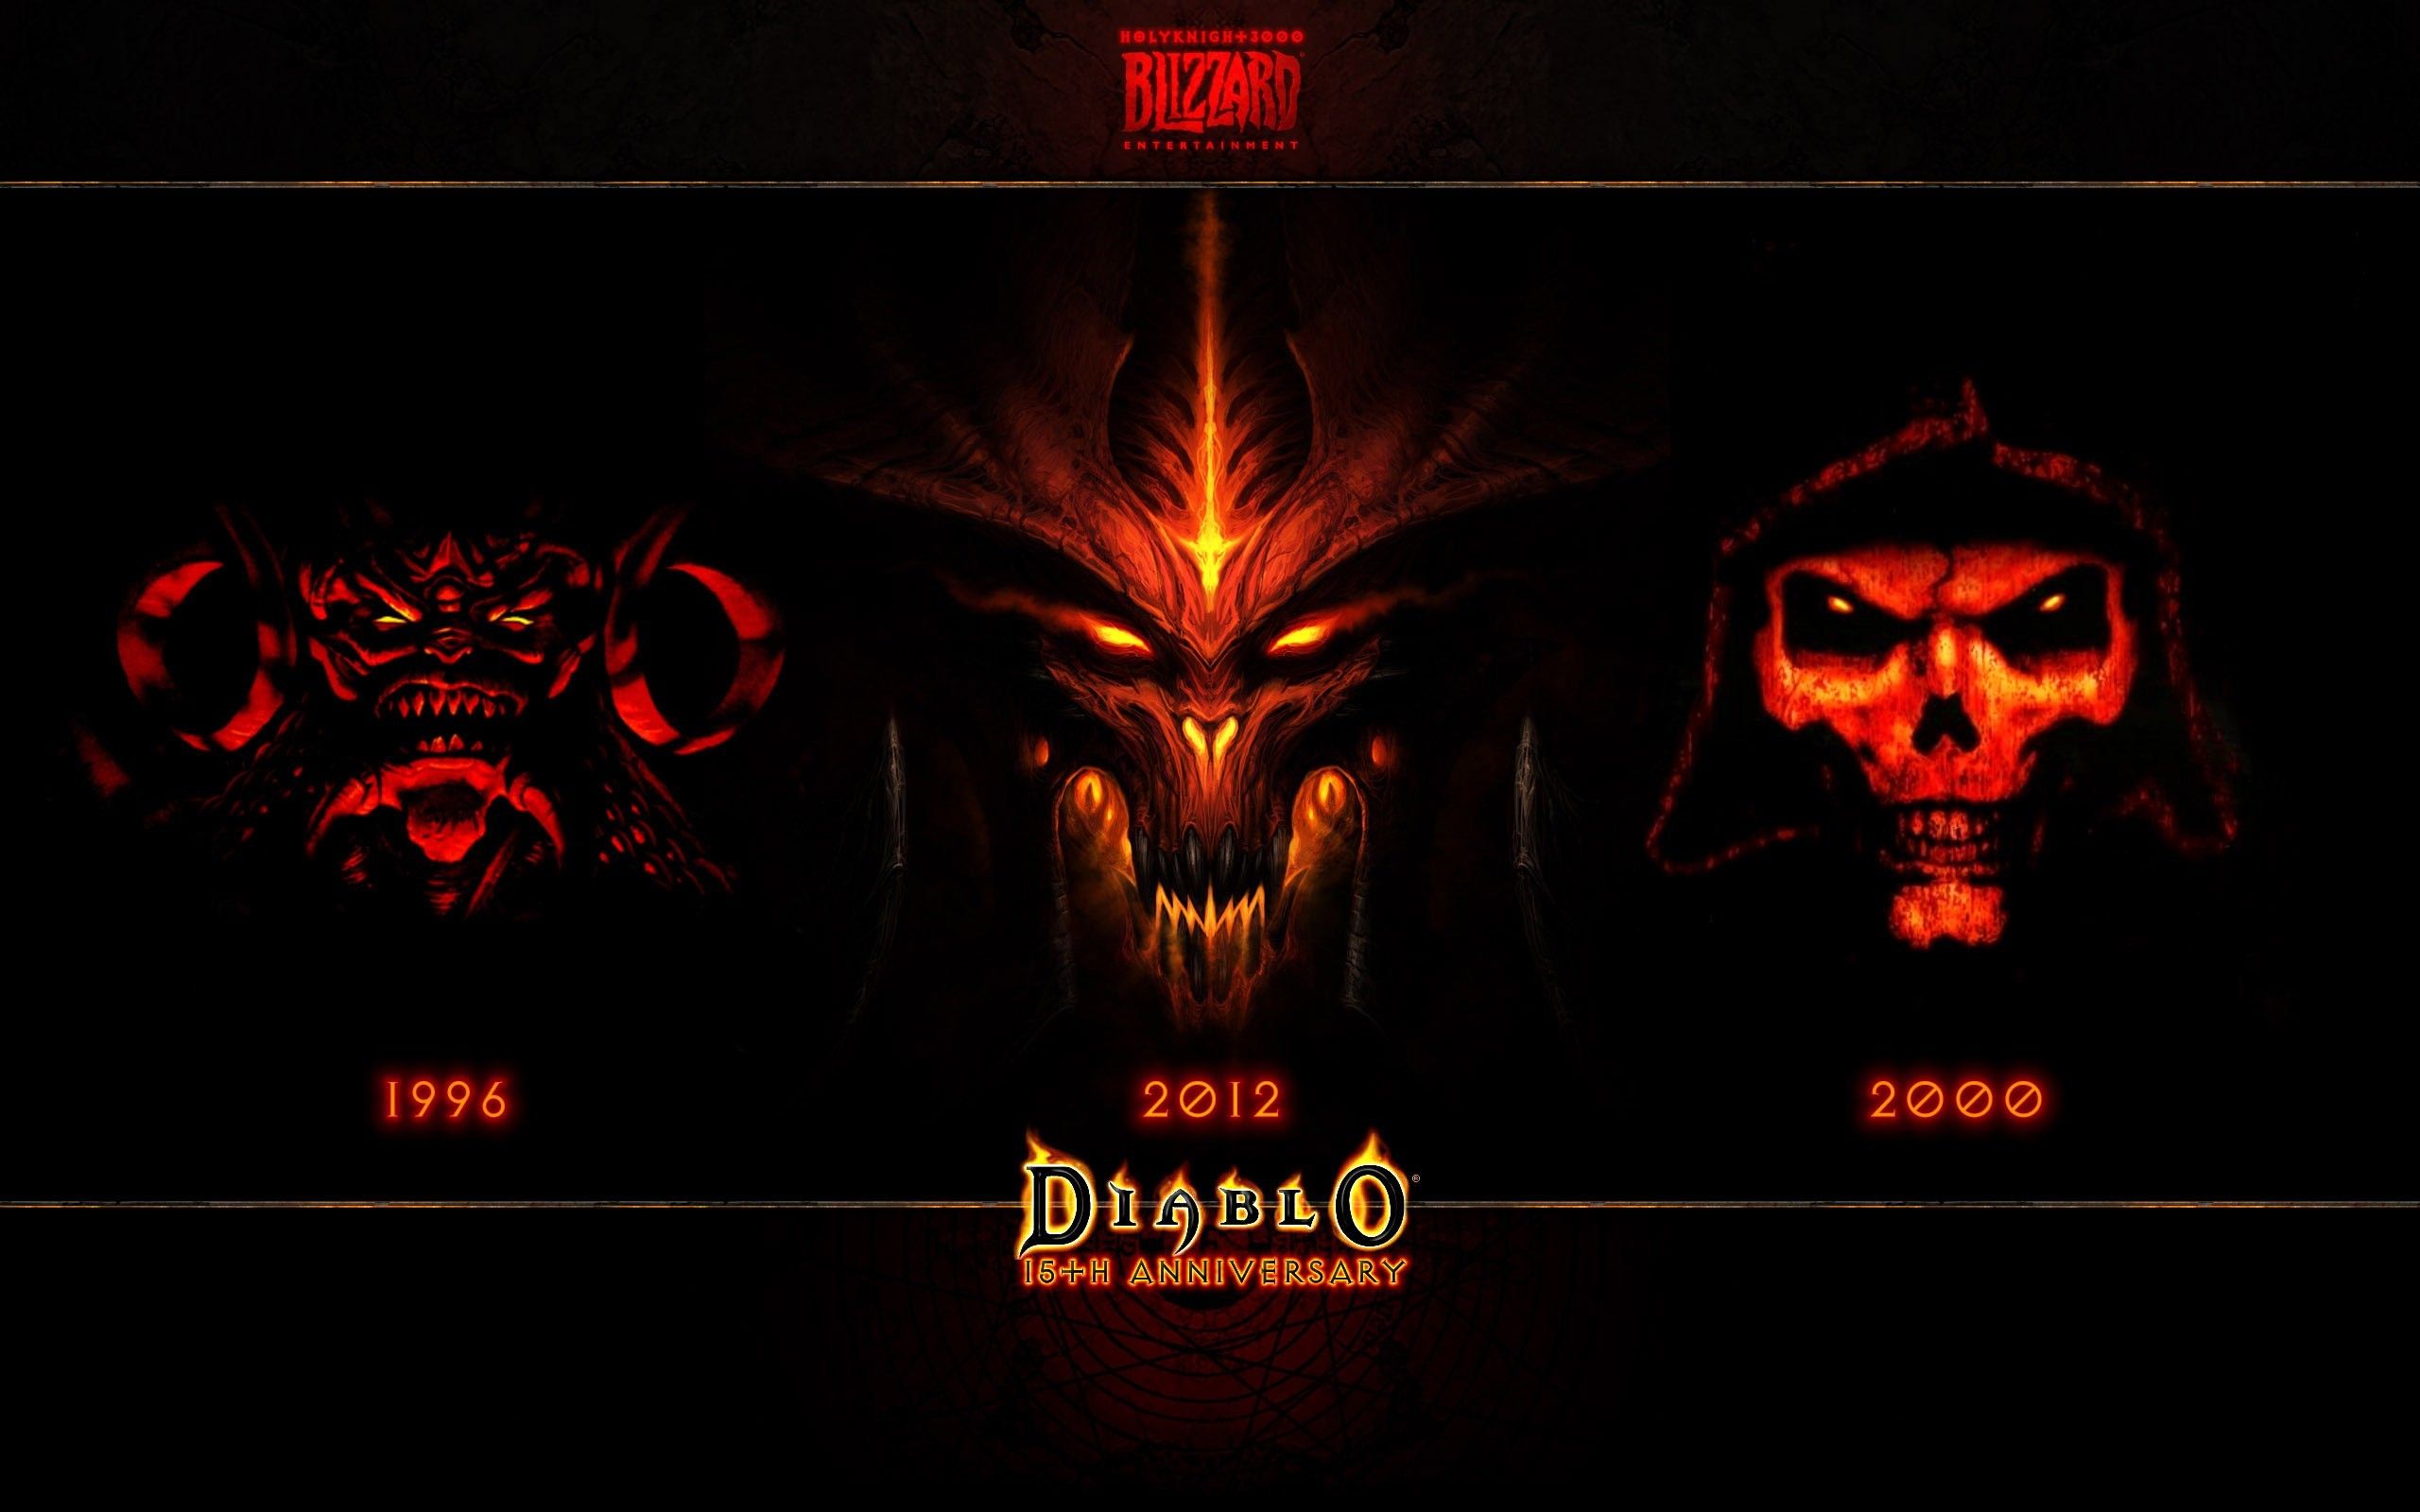 Wallpaper for Desktop Diablo